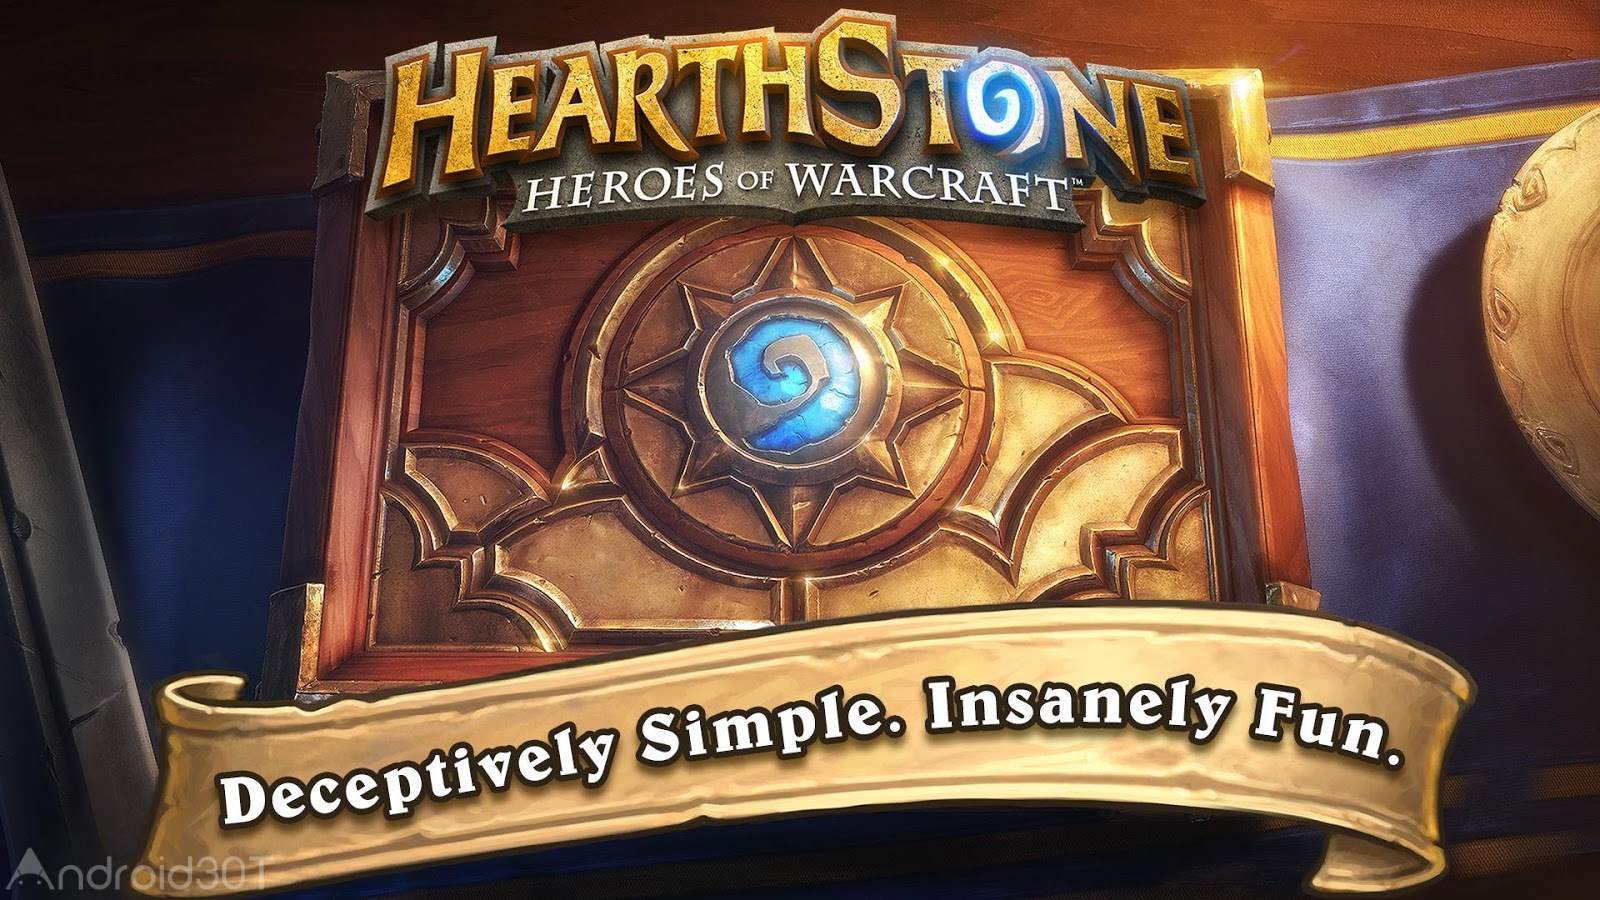 دانلود Hearthstone Heroes of Warcraft 22.0.127581 – بازی کارتی قهرمانان وارکرافت اندروید